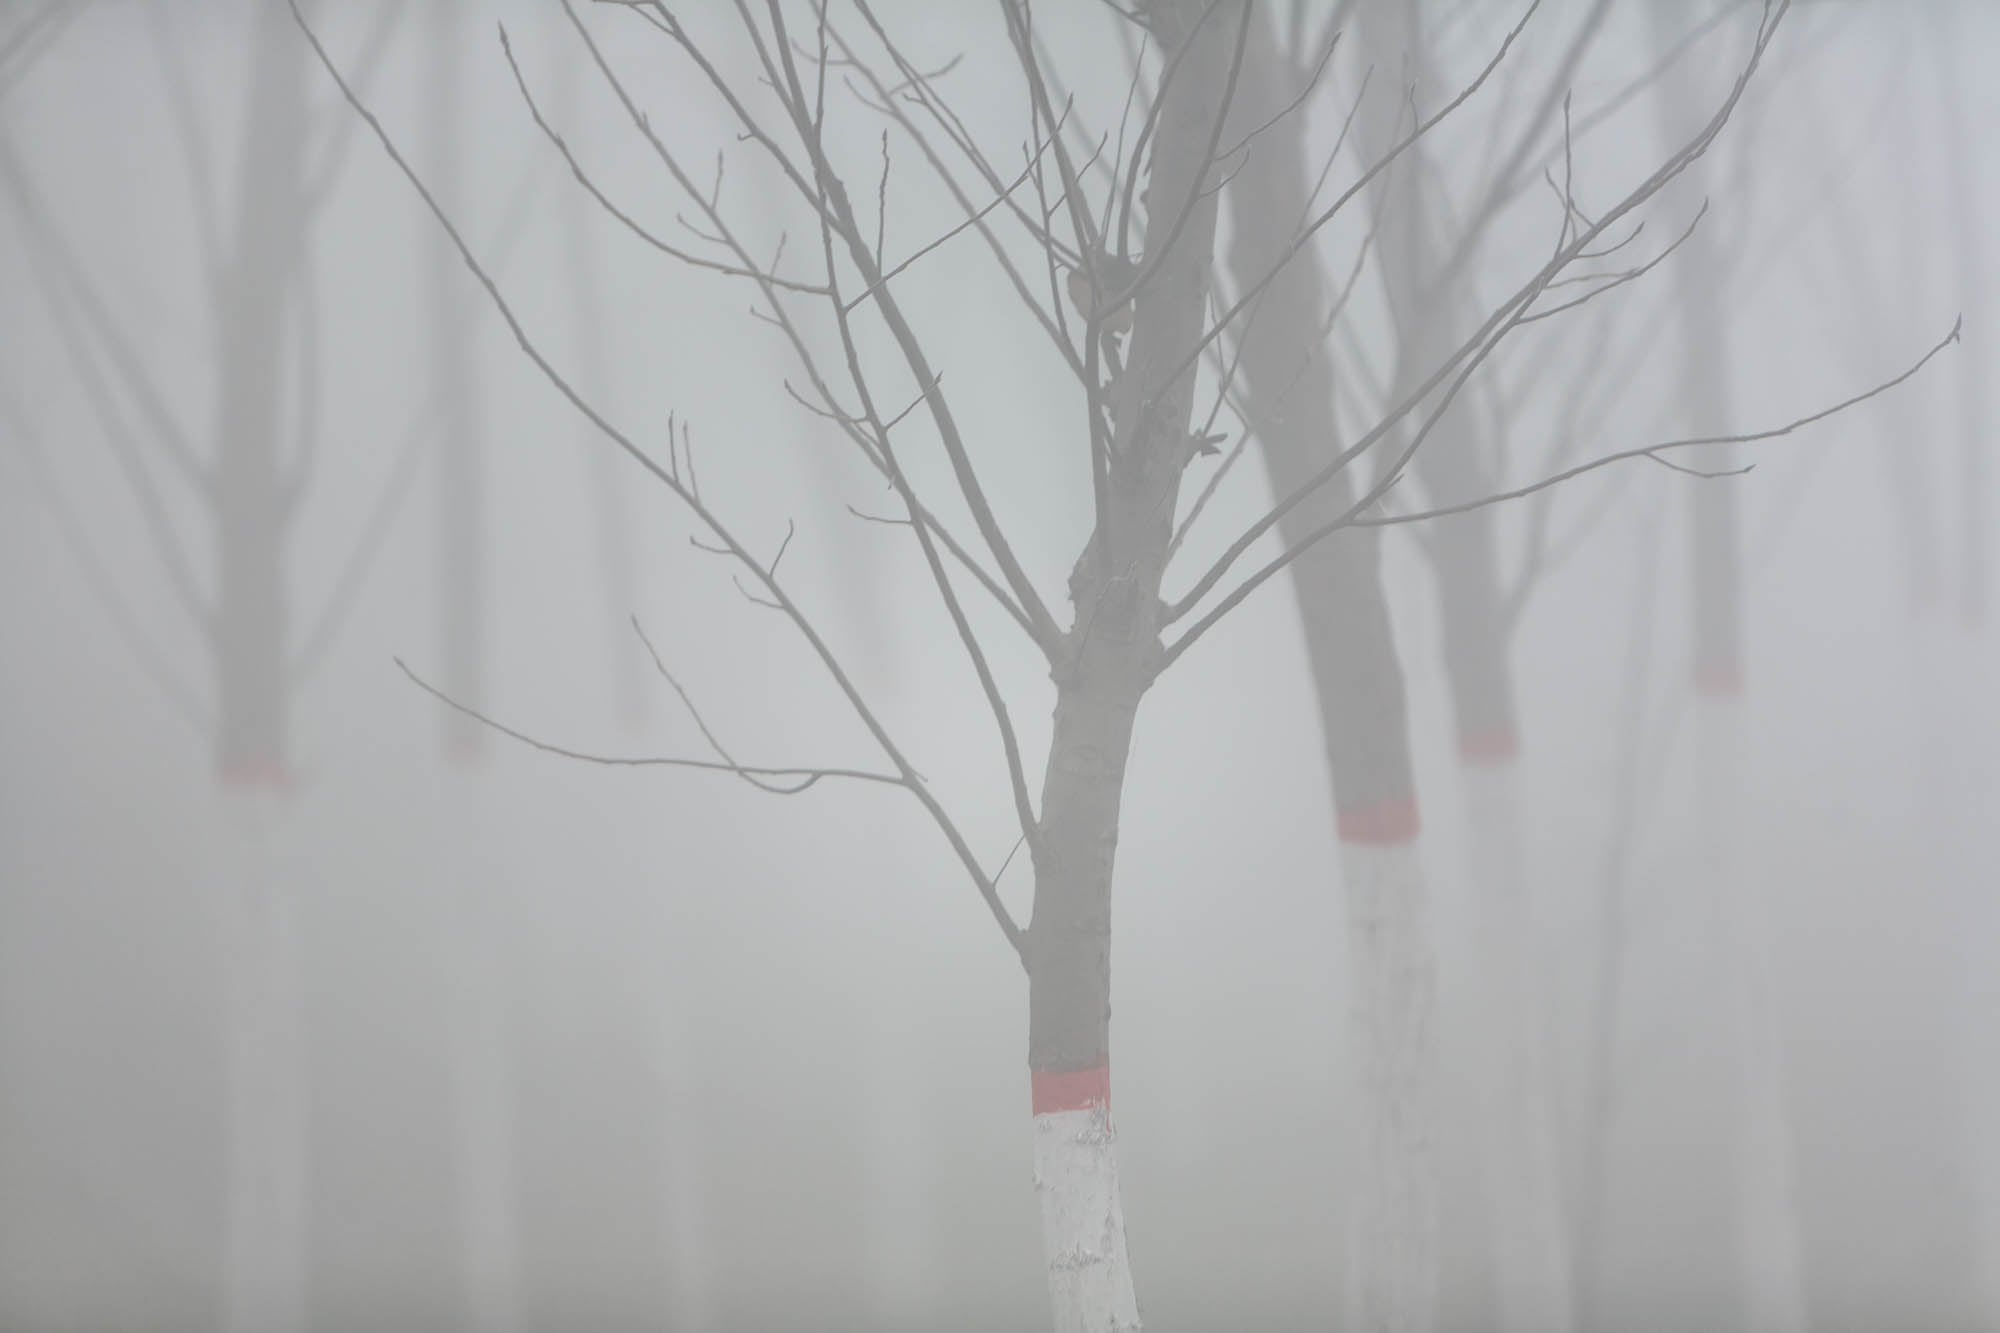 trees in the fog between fangshunqiao and wangdu